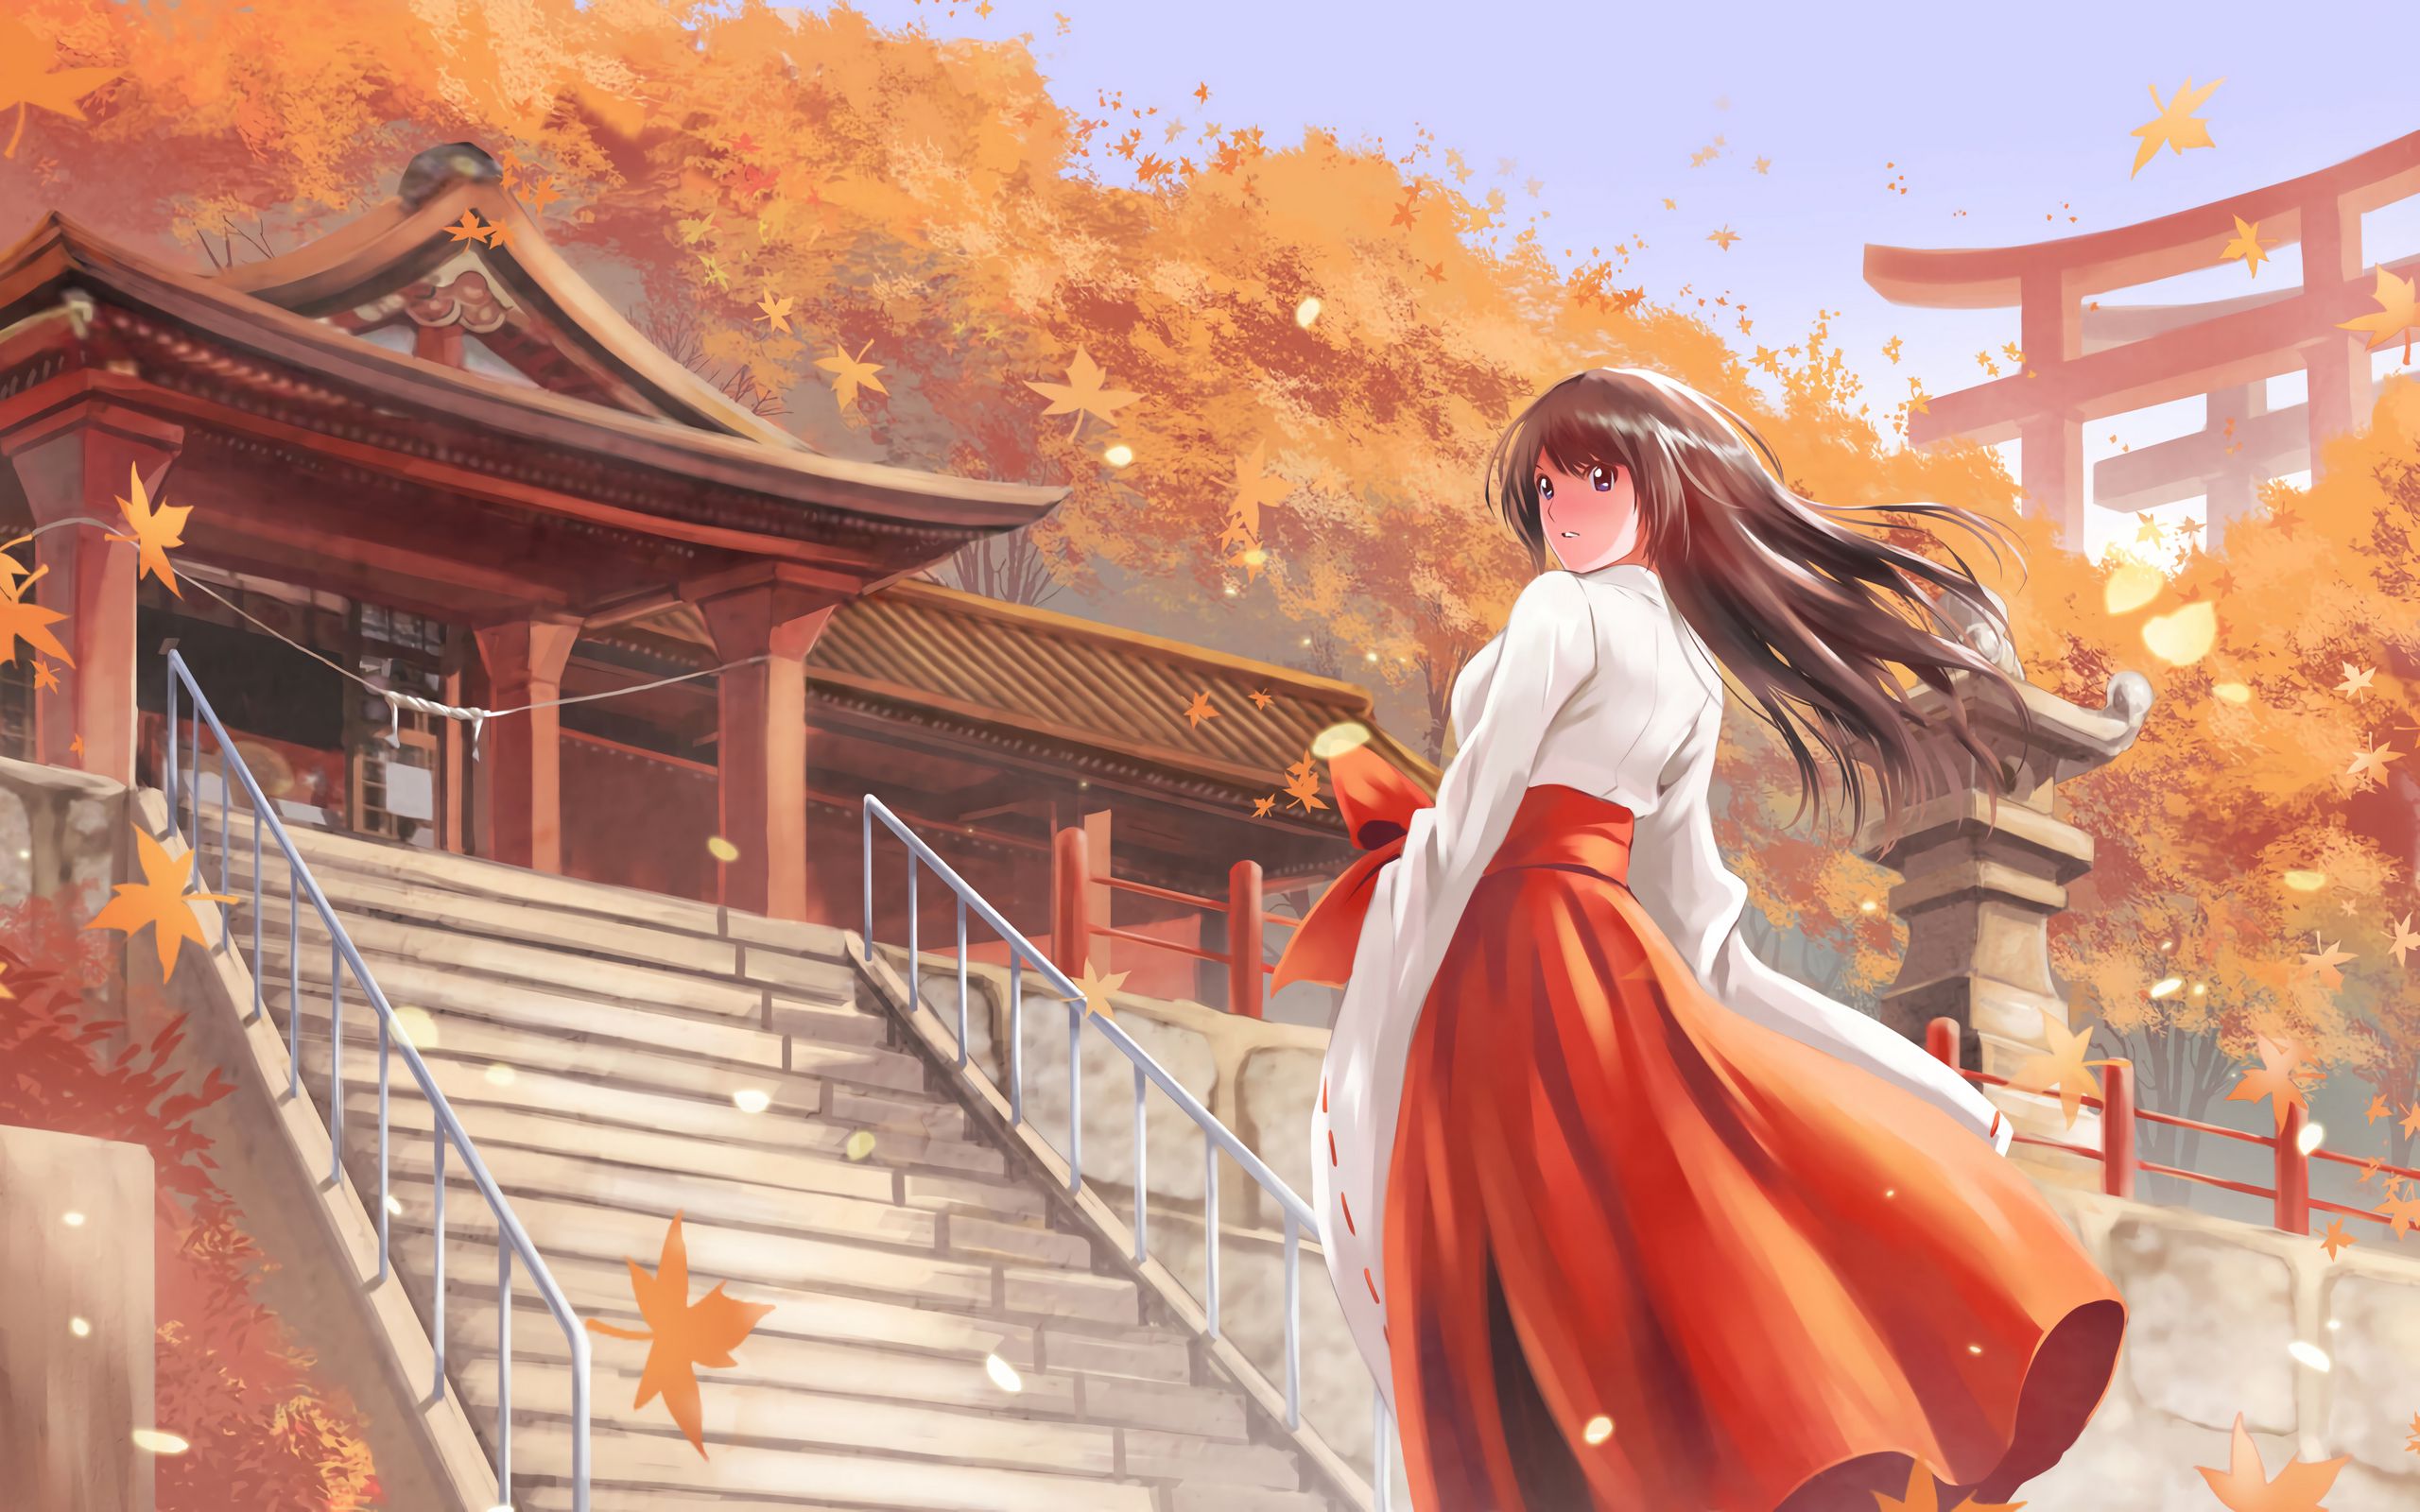 Download wallpaper 2560x1600 girl, kimono, pagoda, autumn, anime, art  widescreen 16:10 hd background